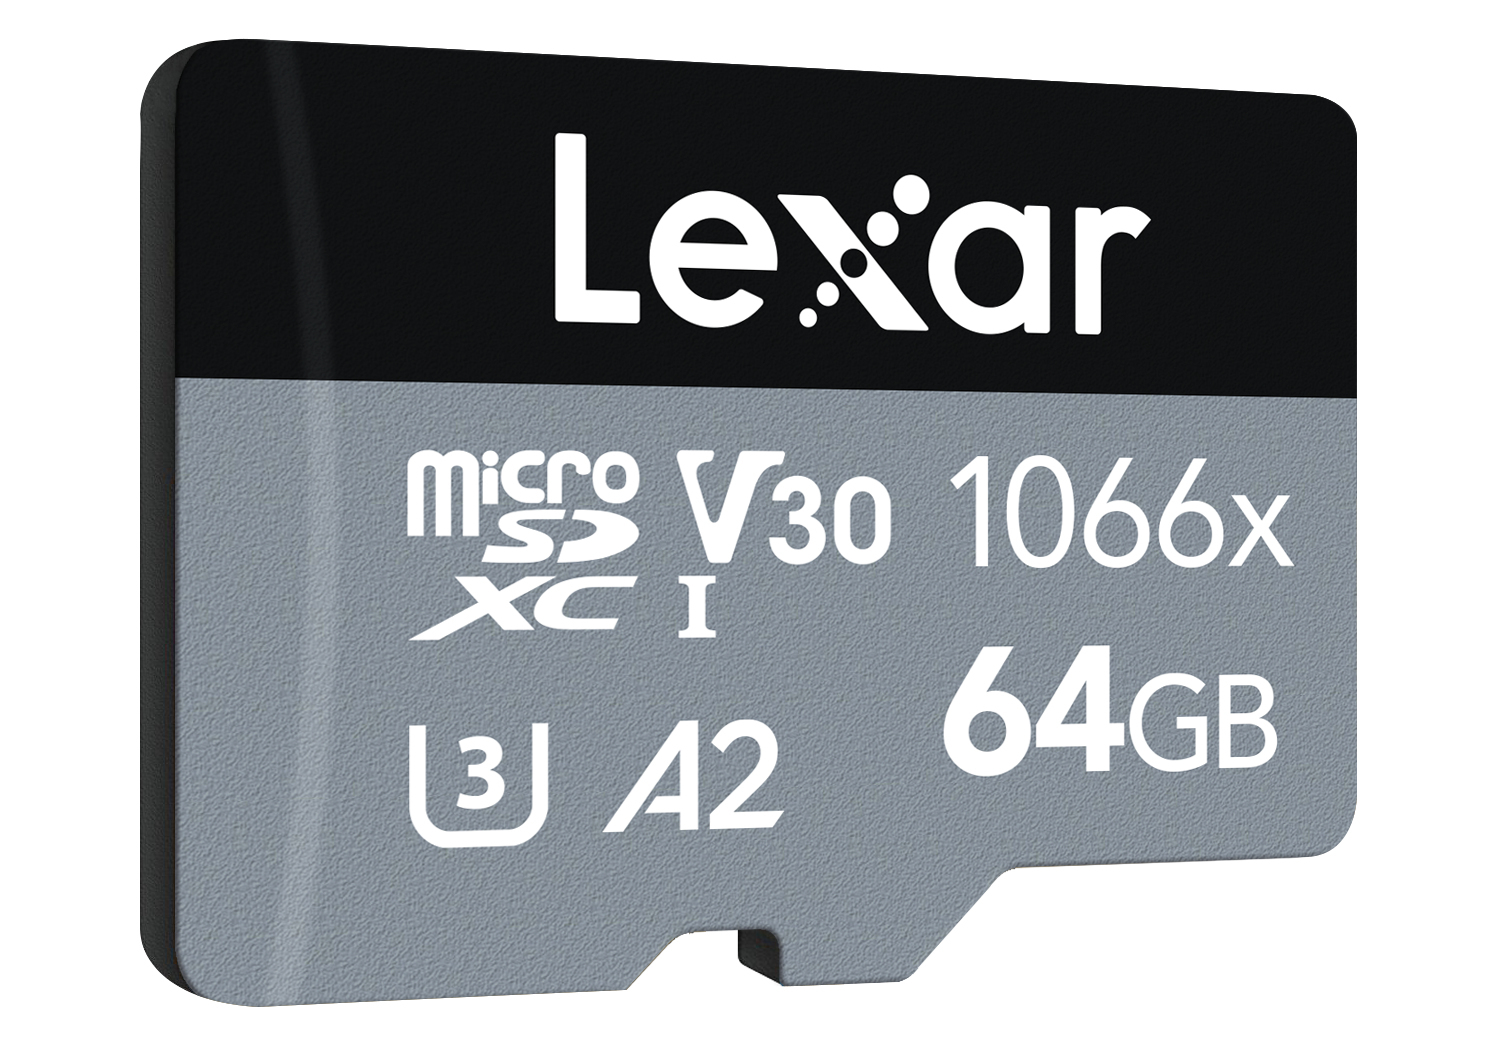 Lexar Professional 1066x microSDXC UHS-I Cards SILVER Series